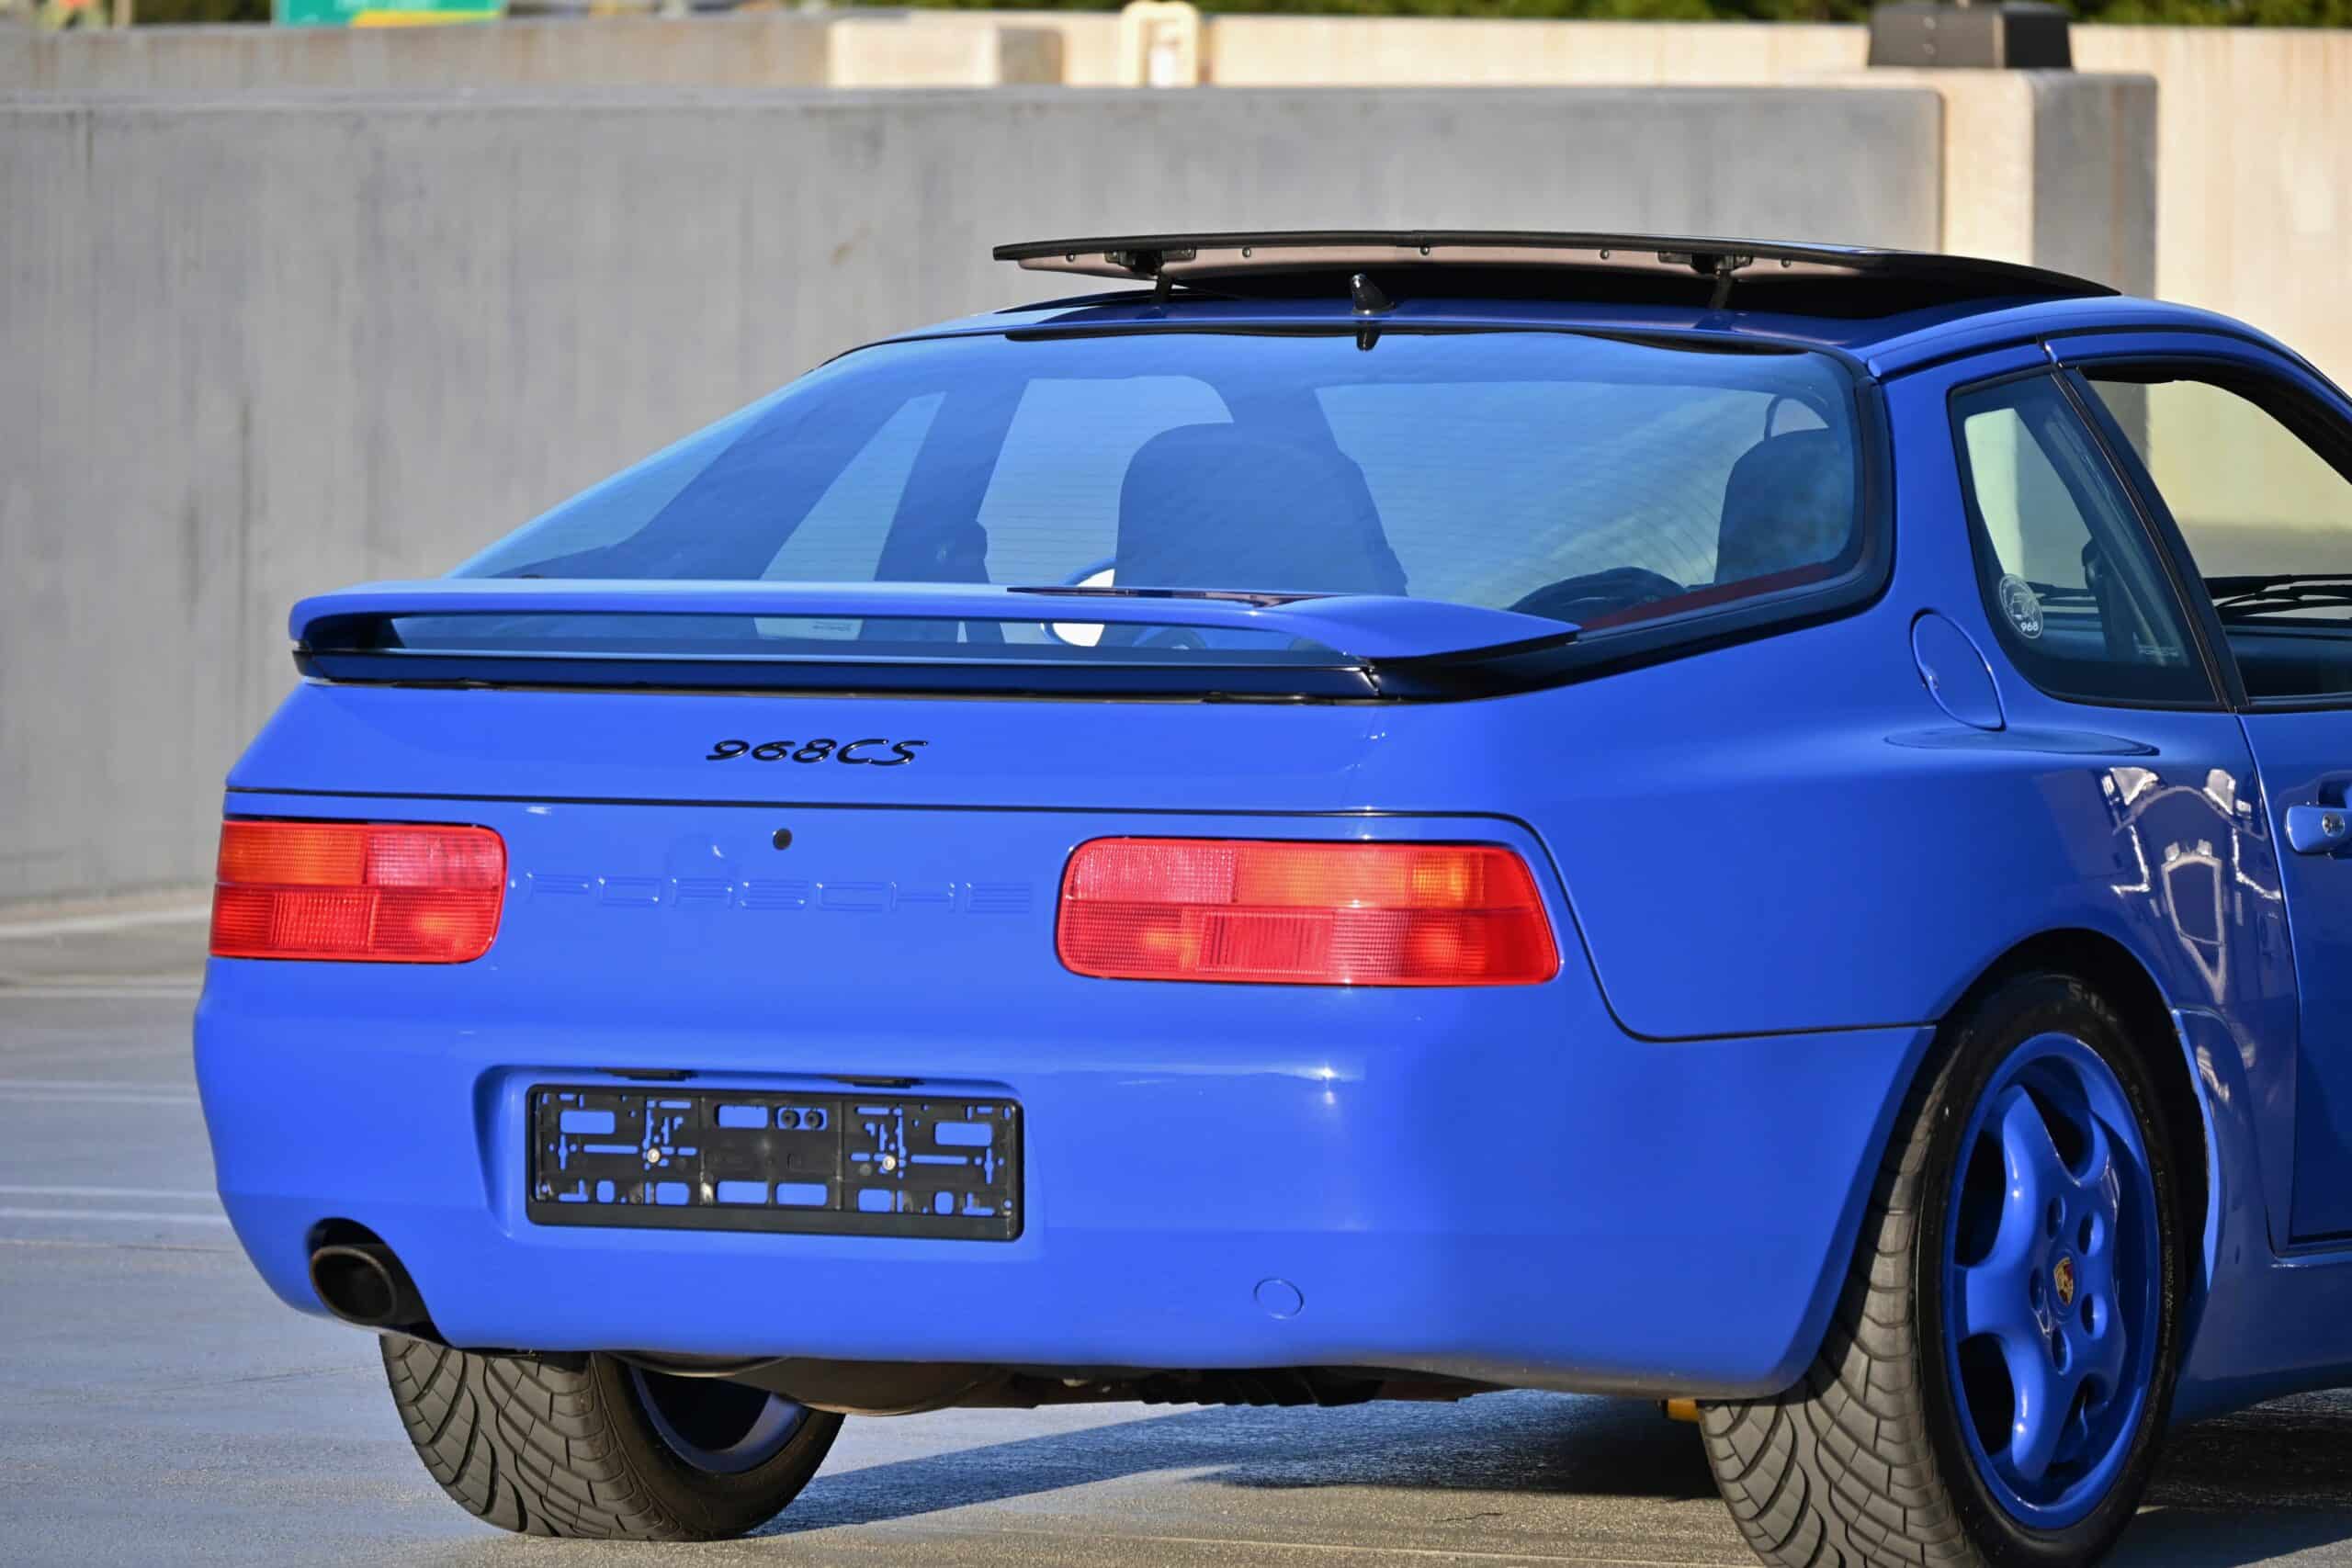 1993 Porsche 968 Club Sport 1 of only 1900 CS 968 ever made – Maritime Blue – Euro Spec – 41k Miles